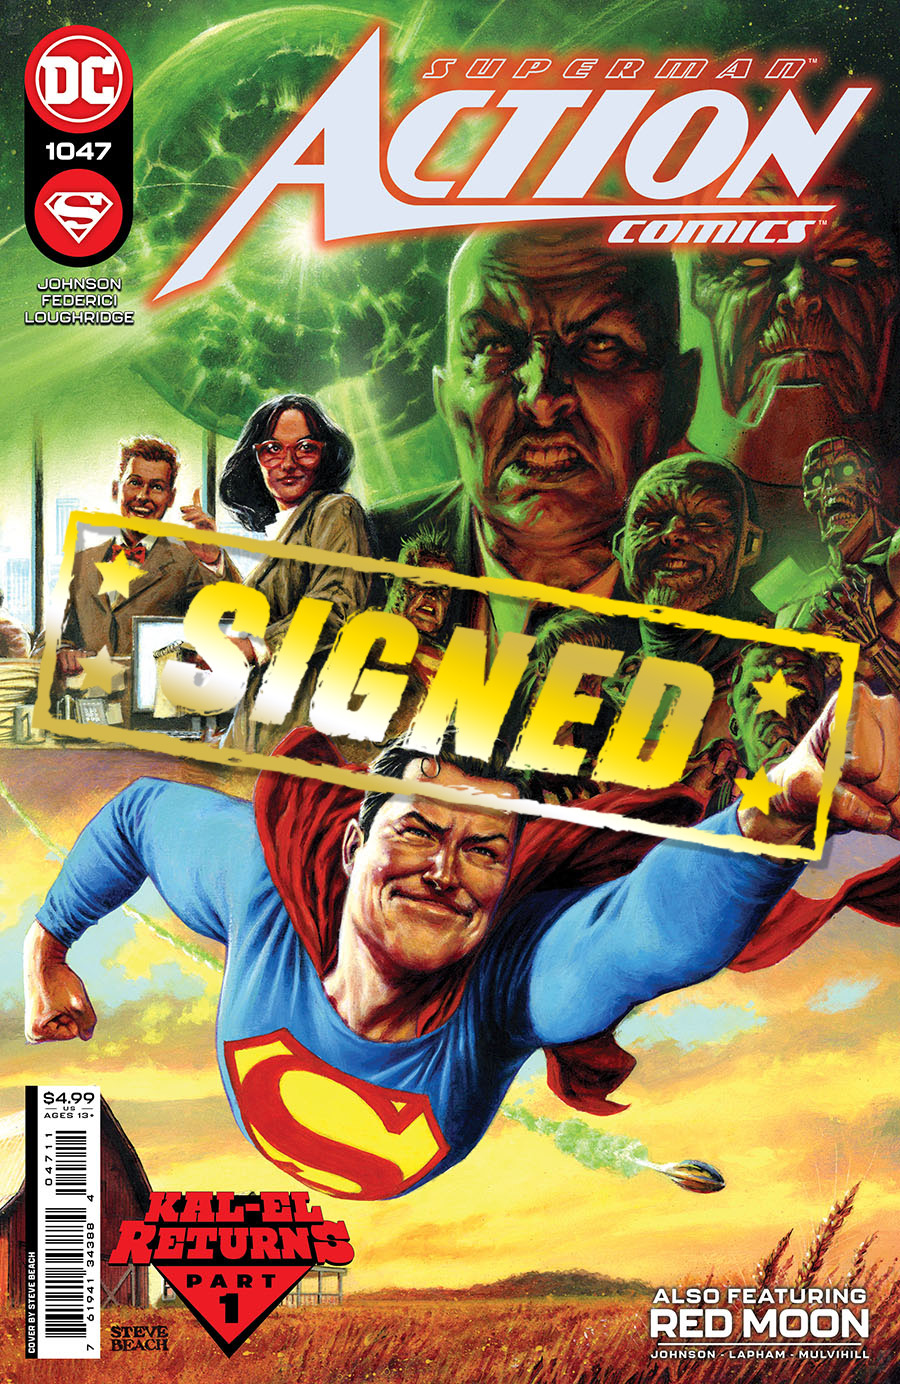 Action Comics Vol 2 #1047 Cover E Regular Steve Beach Cover (Kal-El Returns Part 1) Signed By Phillip Kennedy Johnson